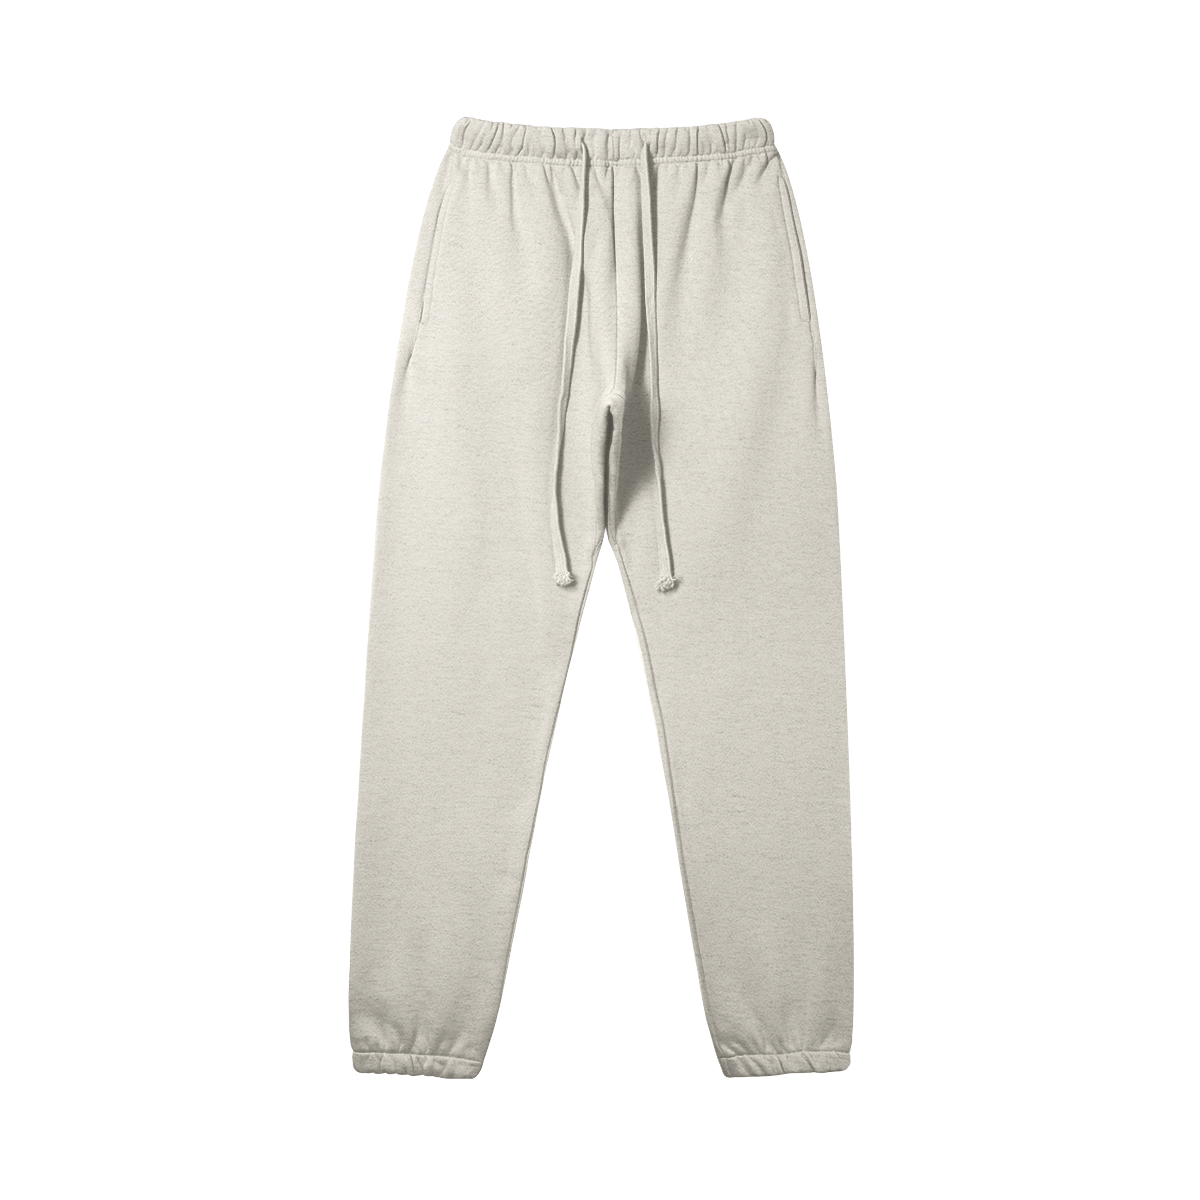 Unisex Heavyweight Fleece Lined Sweatpants